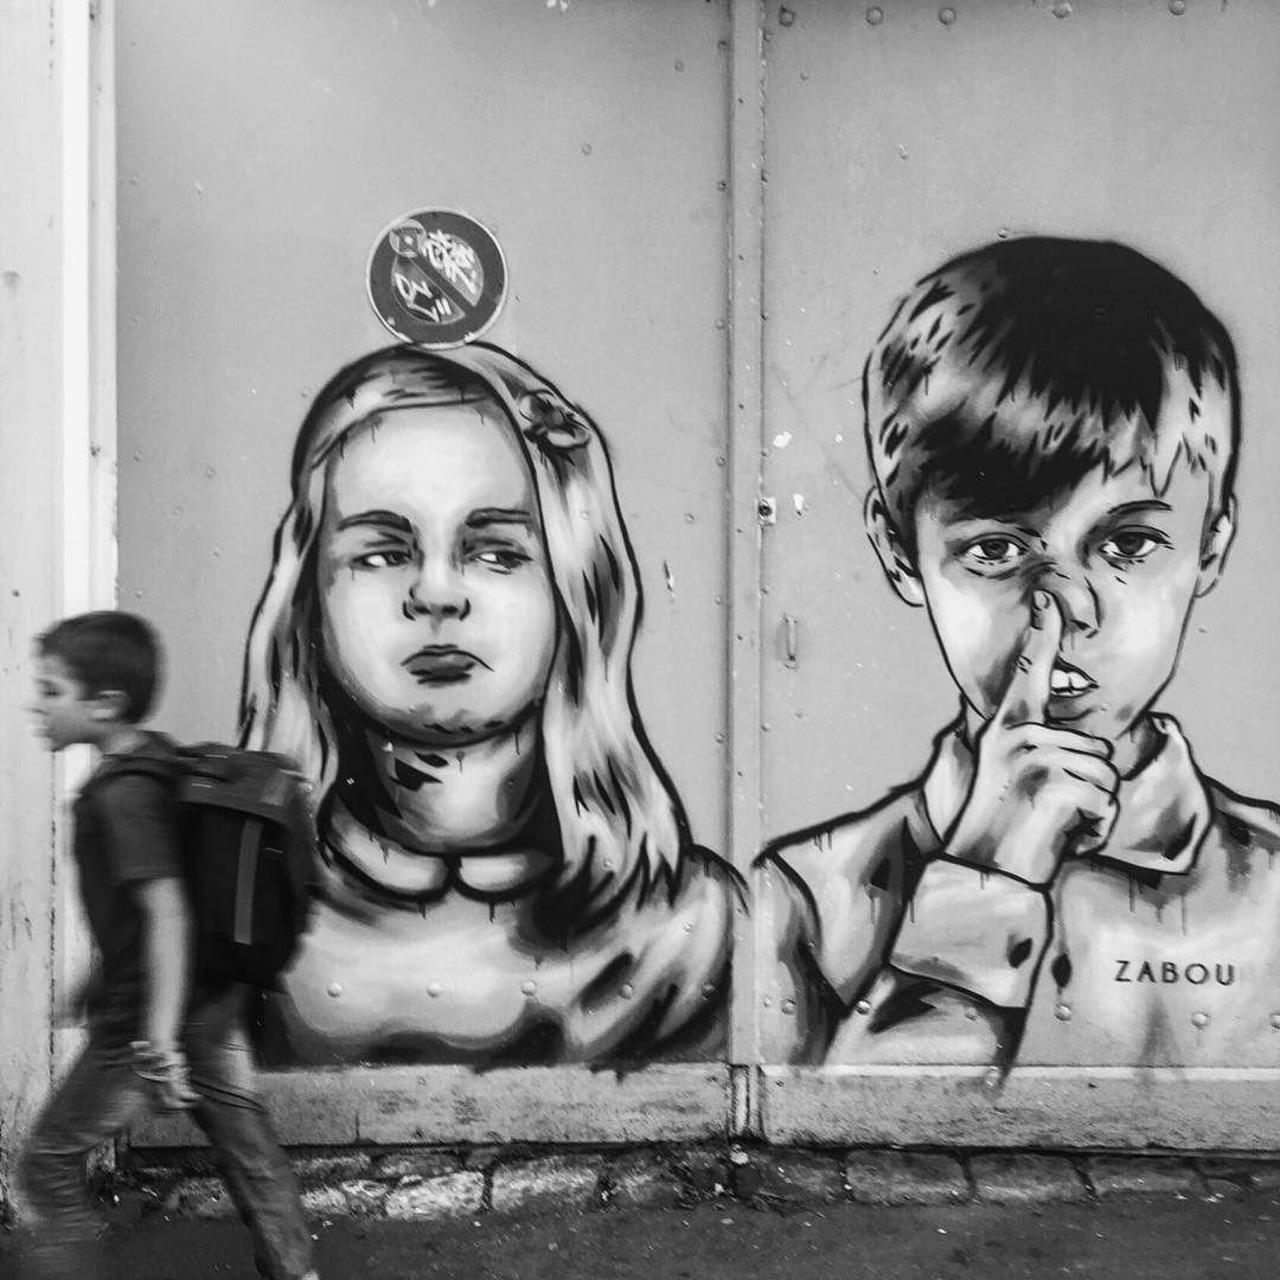 #Paris #graffiti photo by @catscoffeecreativity http://ift.tt/1NLL03N #StreetArt http://t.co/6xpZnIuGim